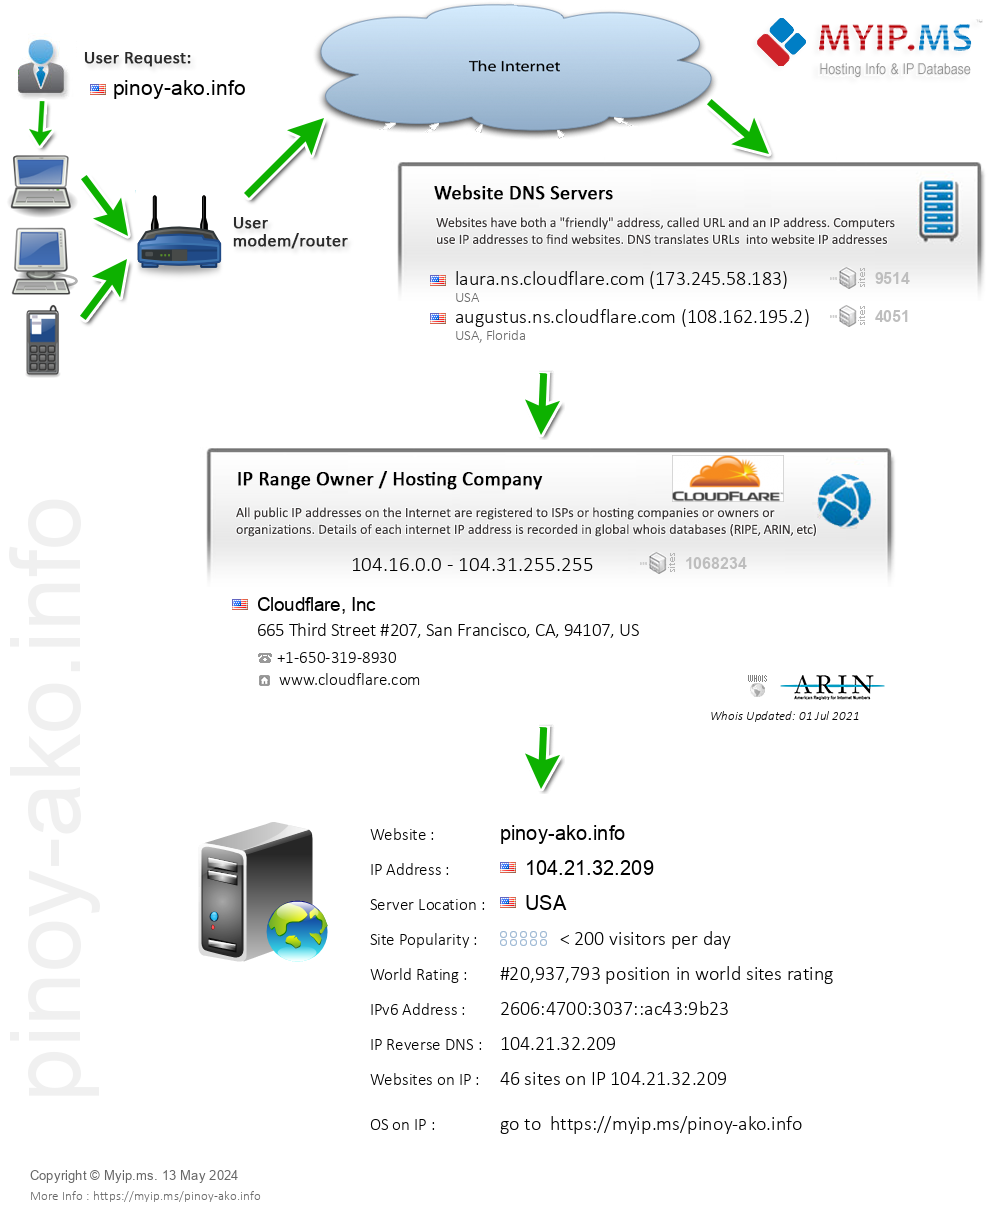 Pinoy-ako.info - Website Hosting Visual IP Diagram